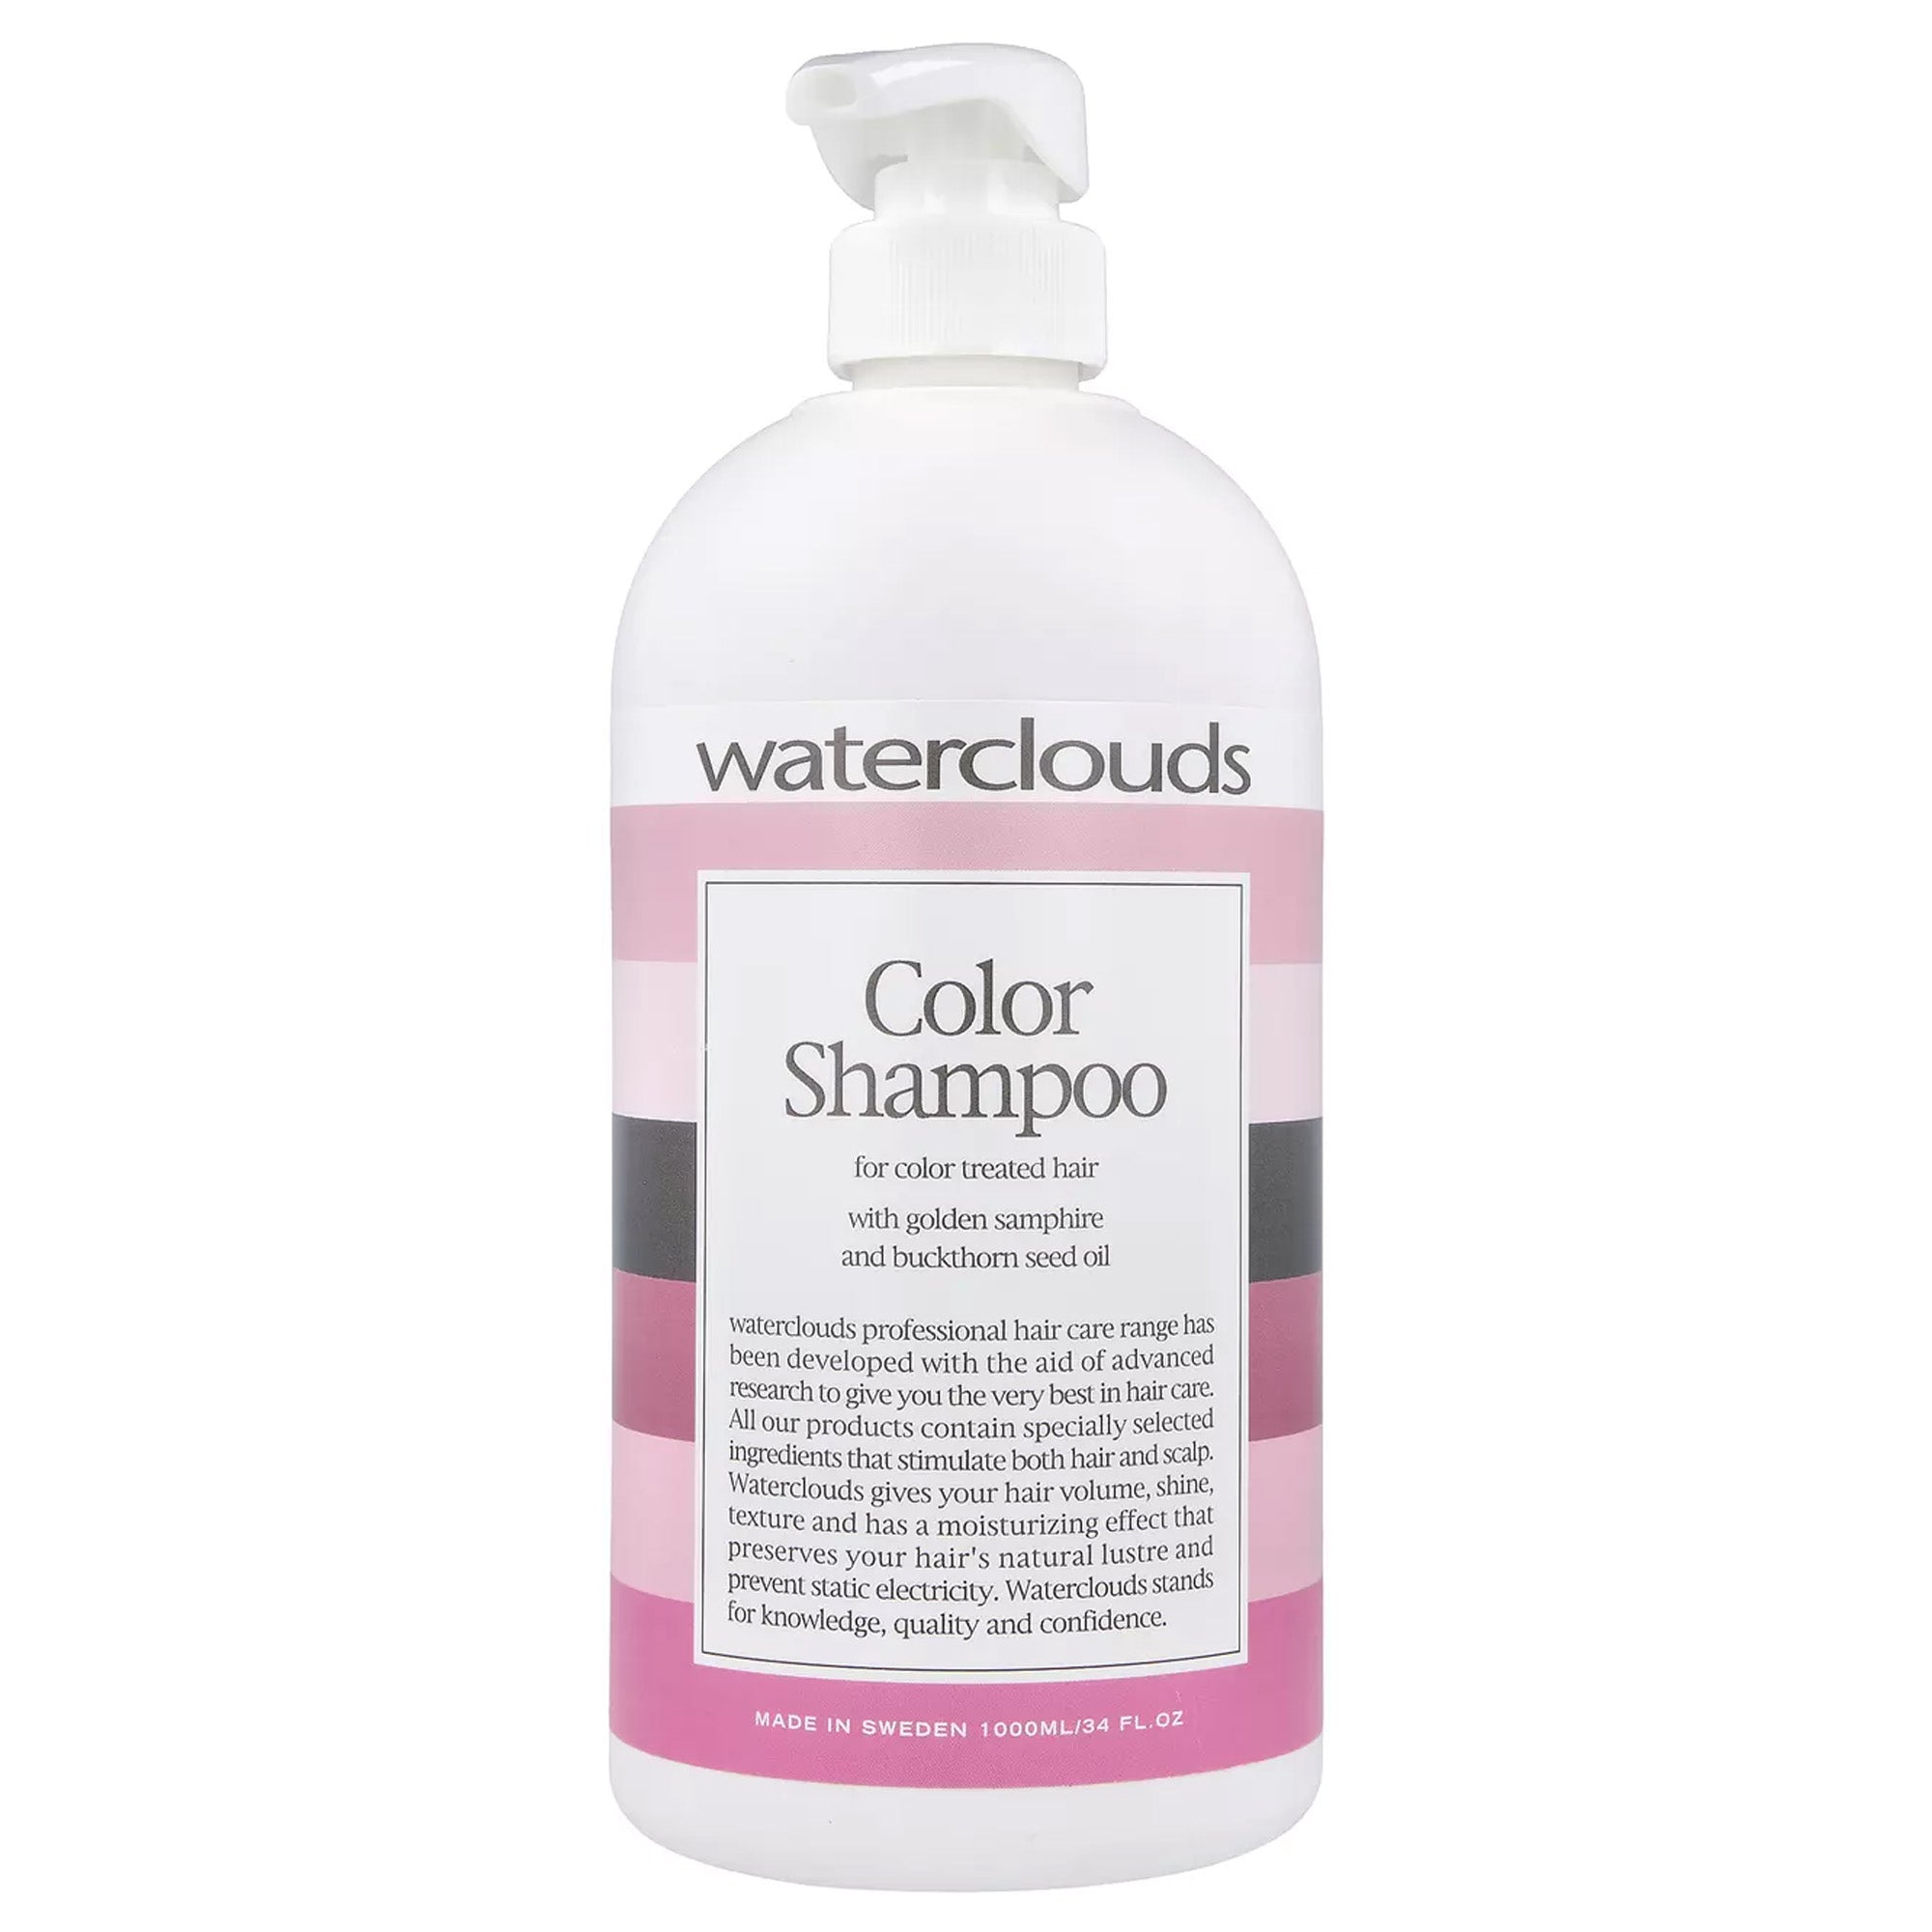 Color shampoo